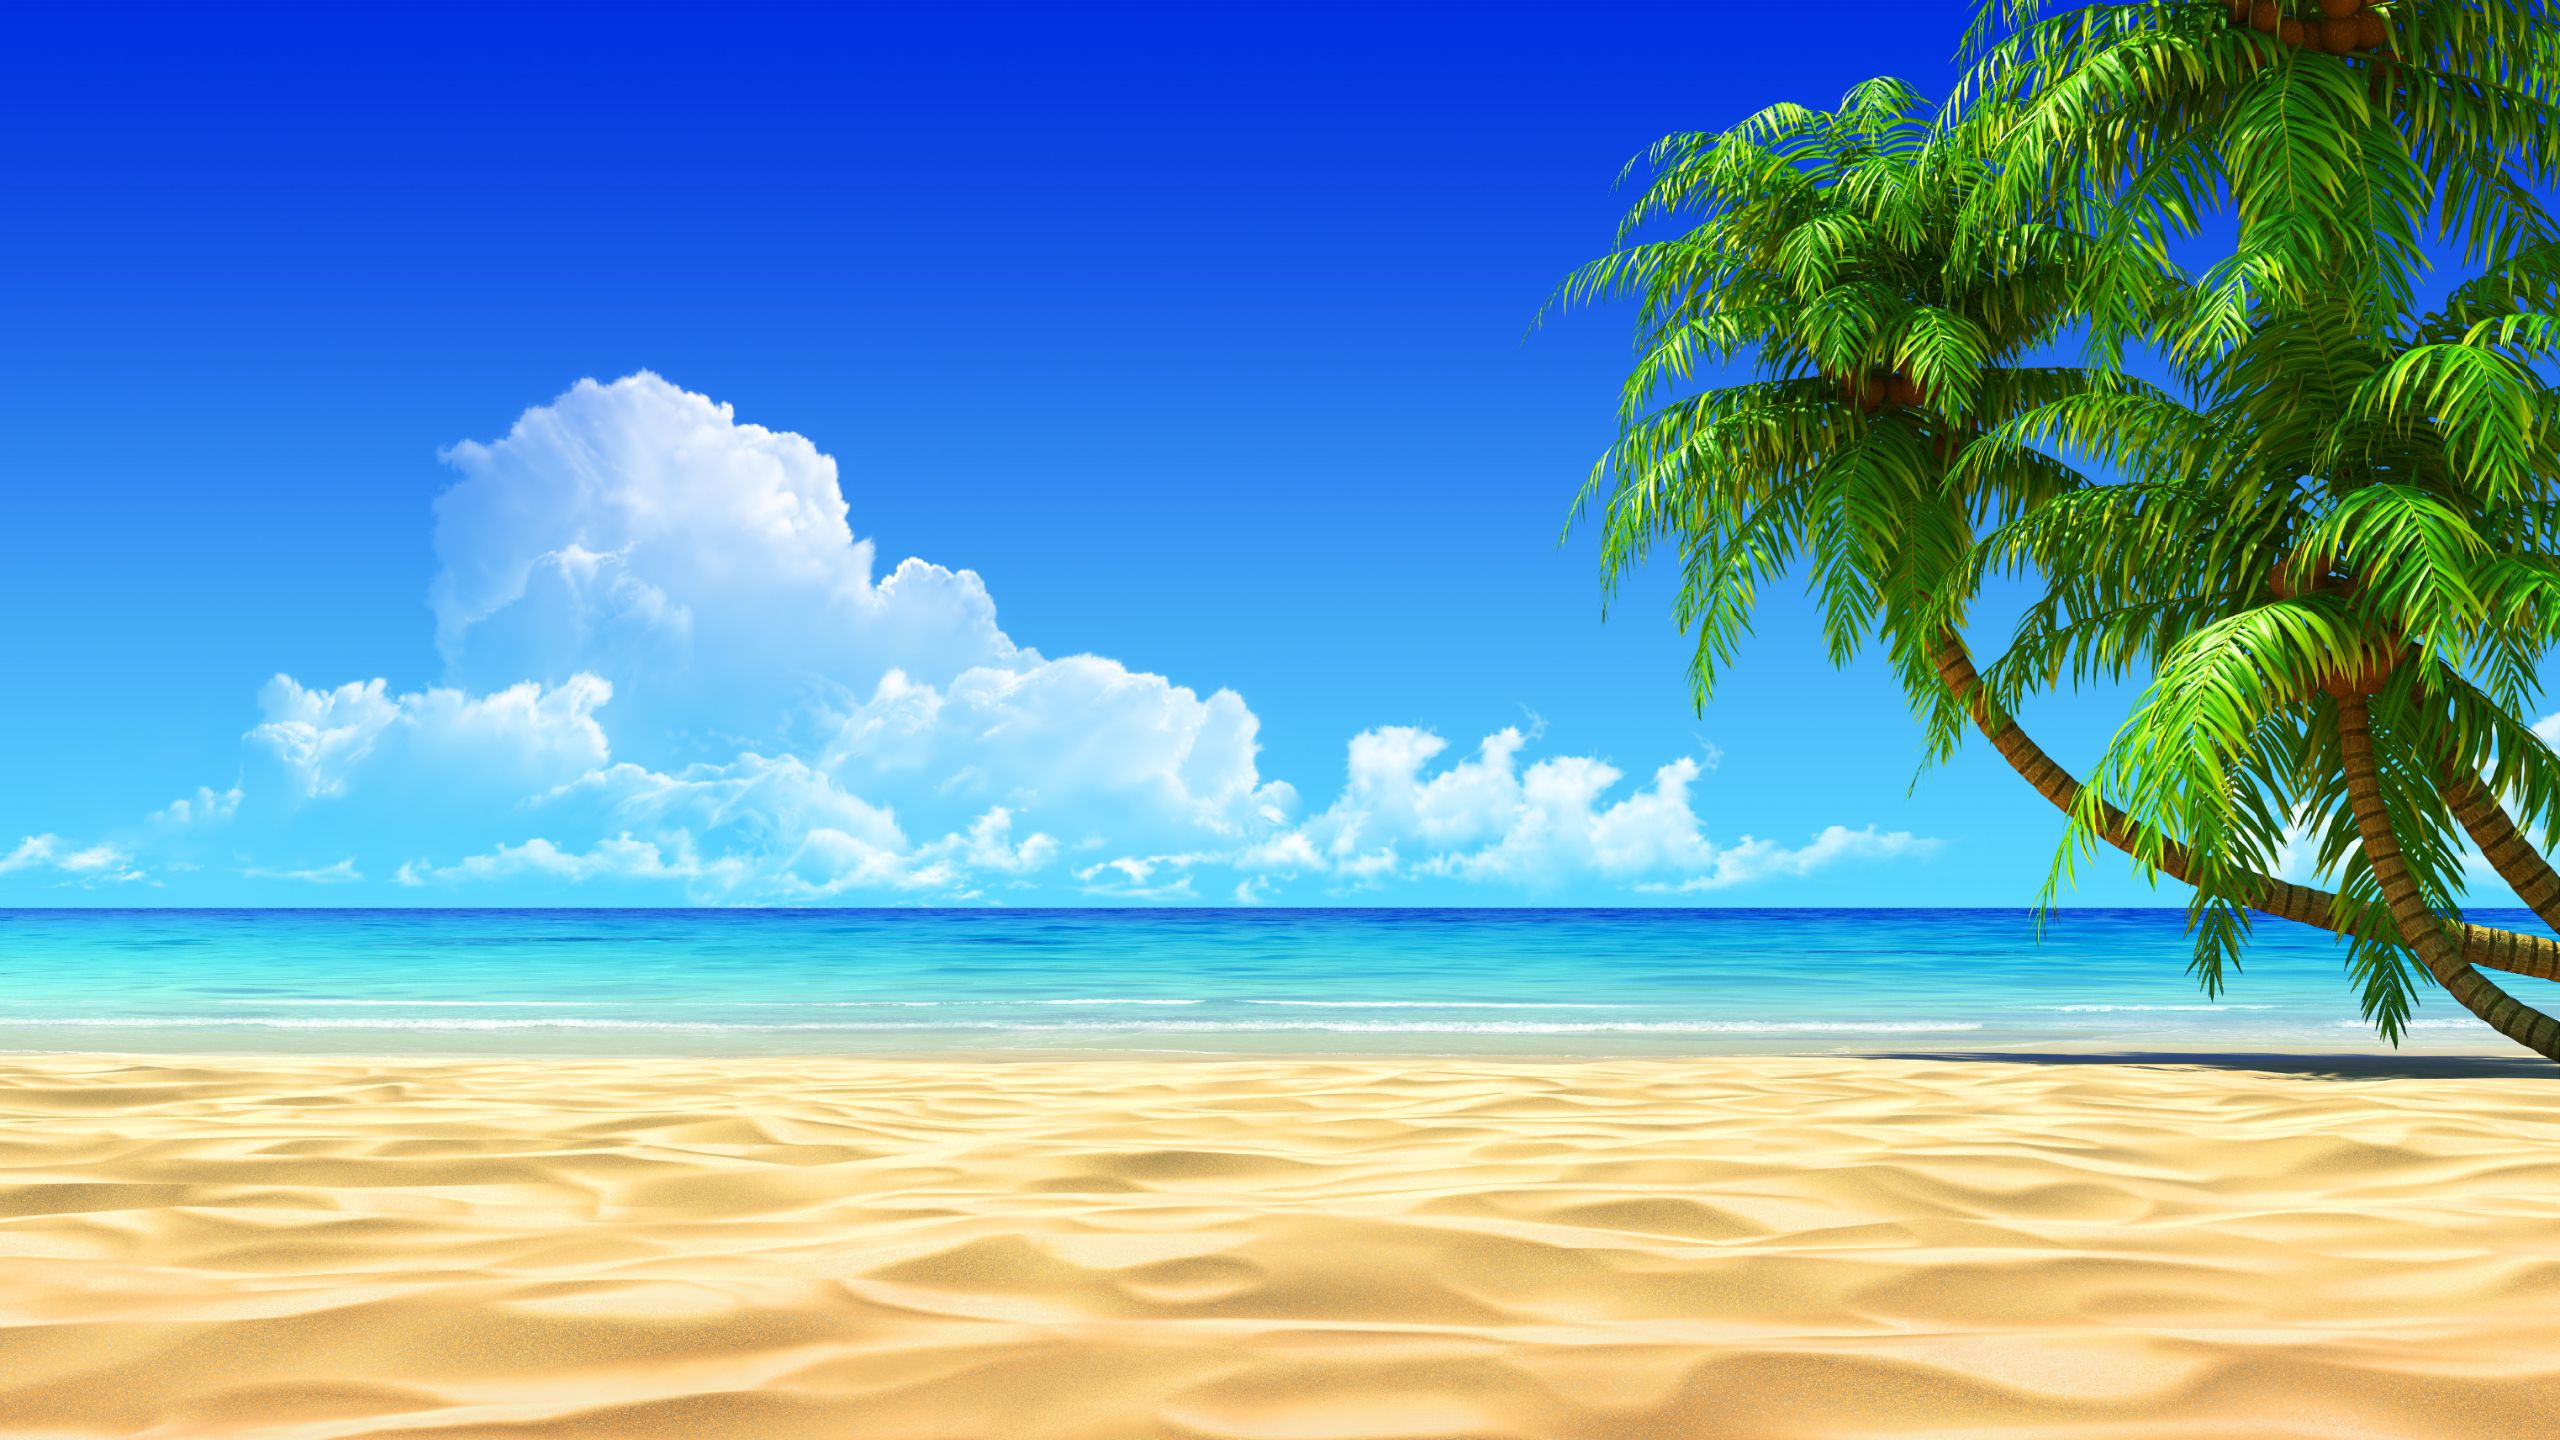 Tropical Beach Image. HD Wallpaper Pulse